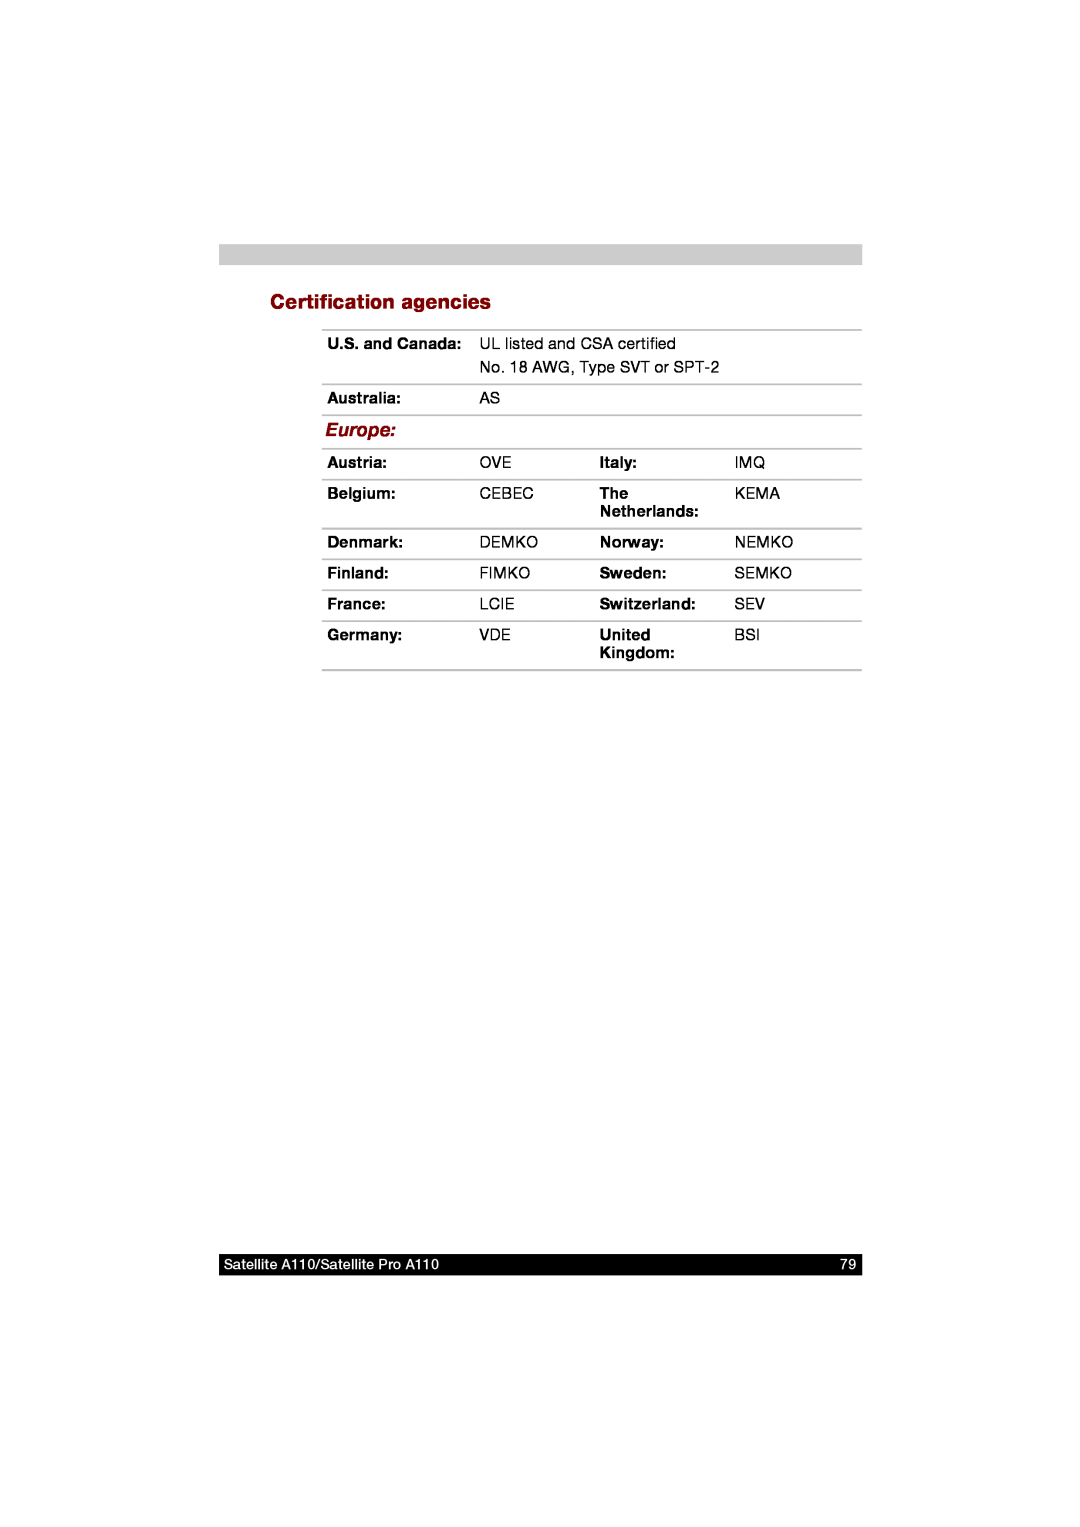 Toshiba A110 user manual Certification agencies, Europe 